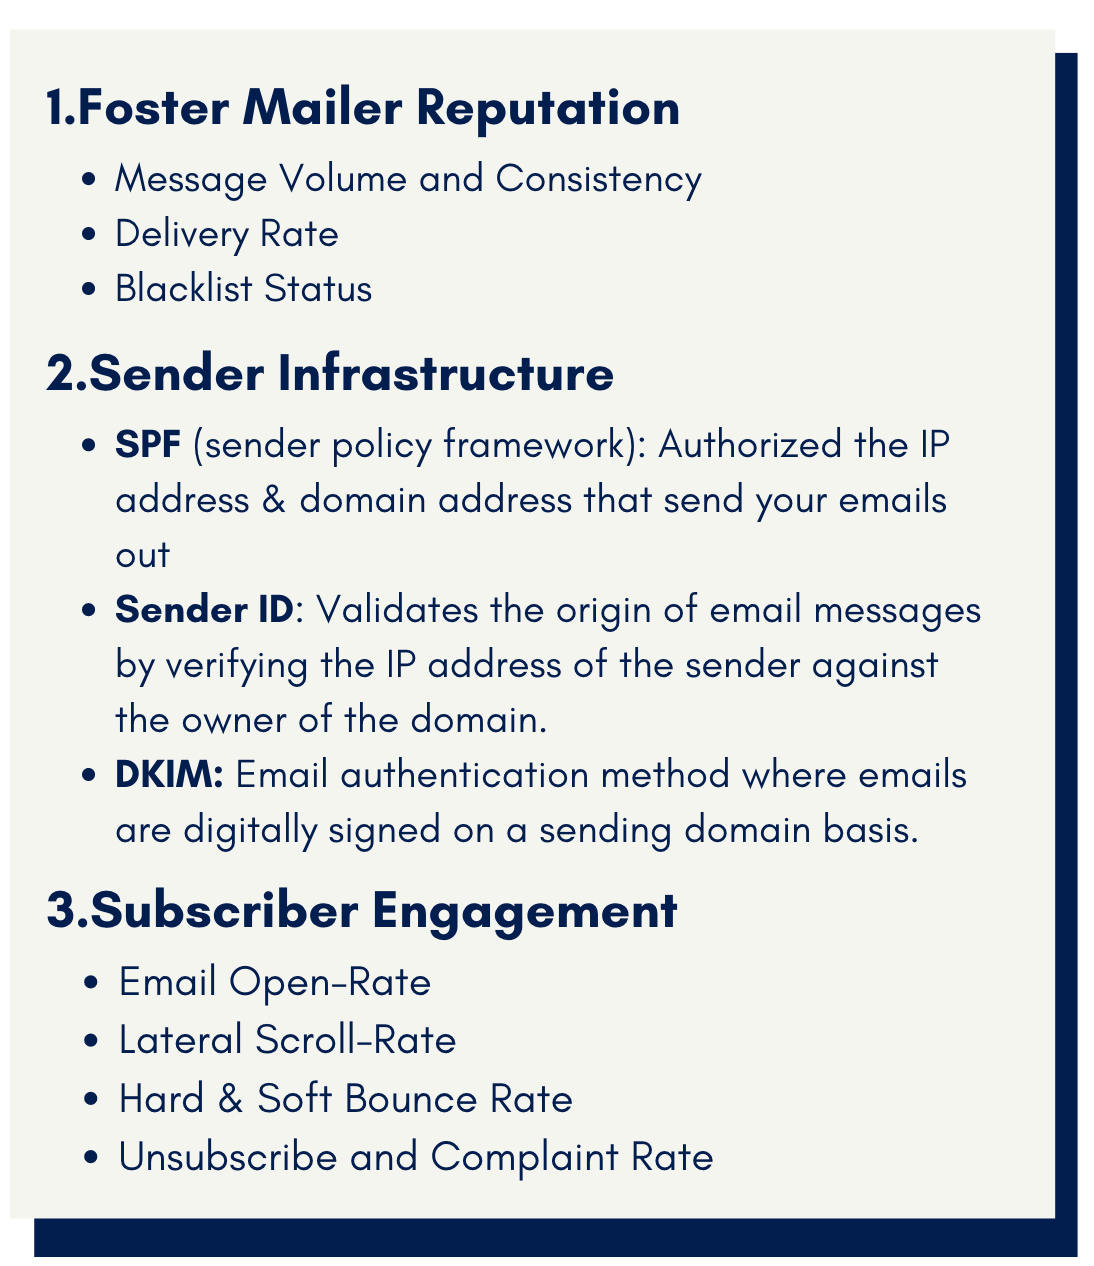 3 ways to foster mailer reputation